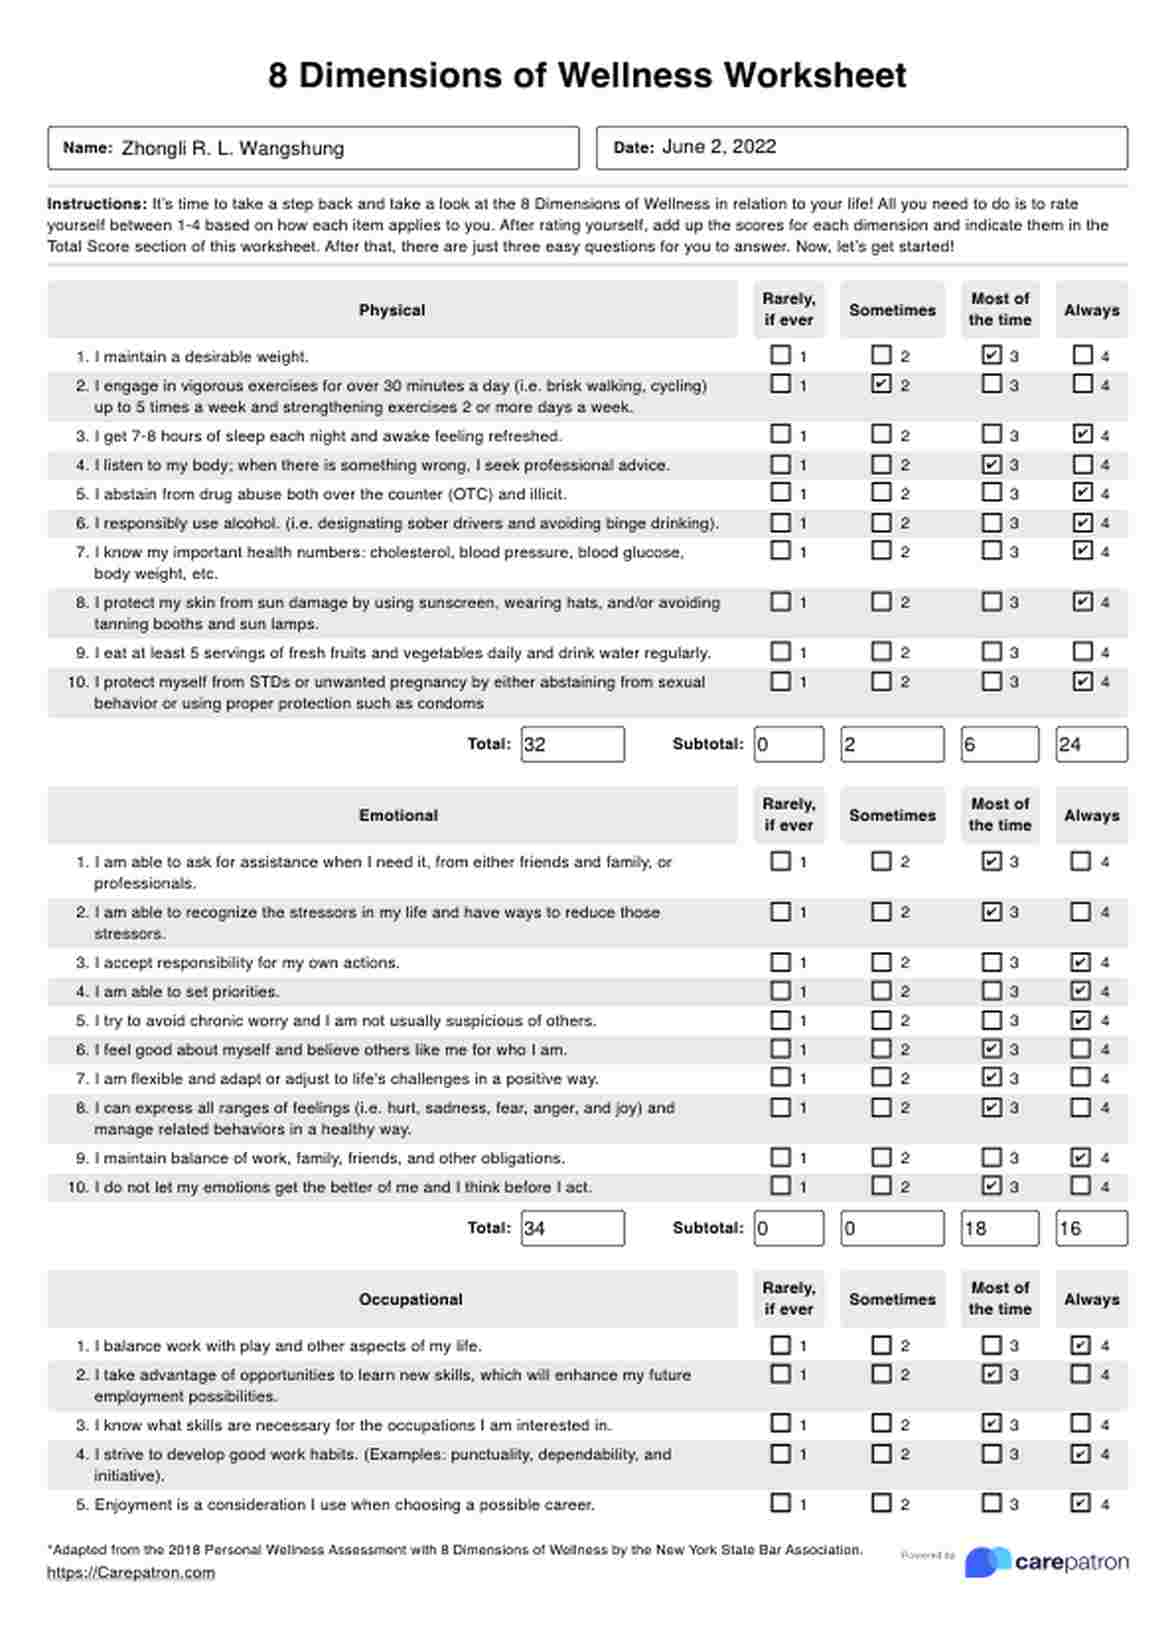 8 Dimensions of Wellness Worksheet PDF Example